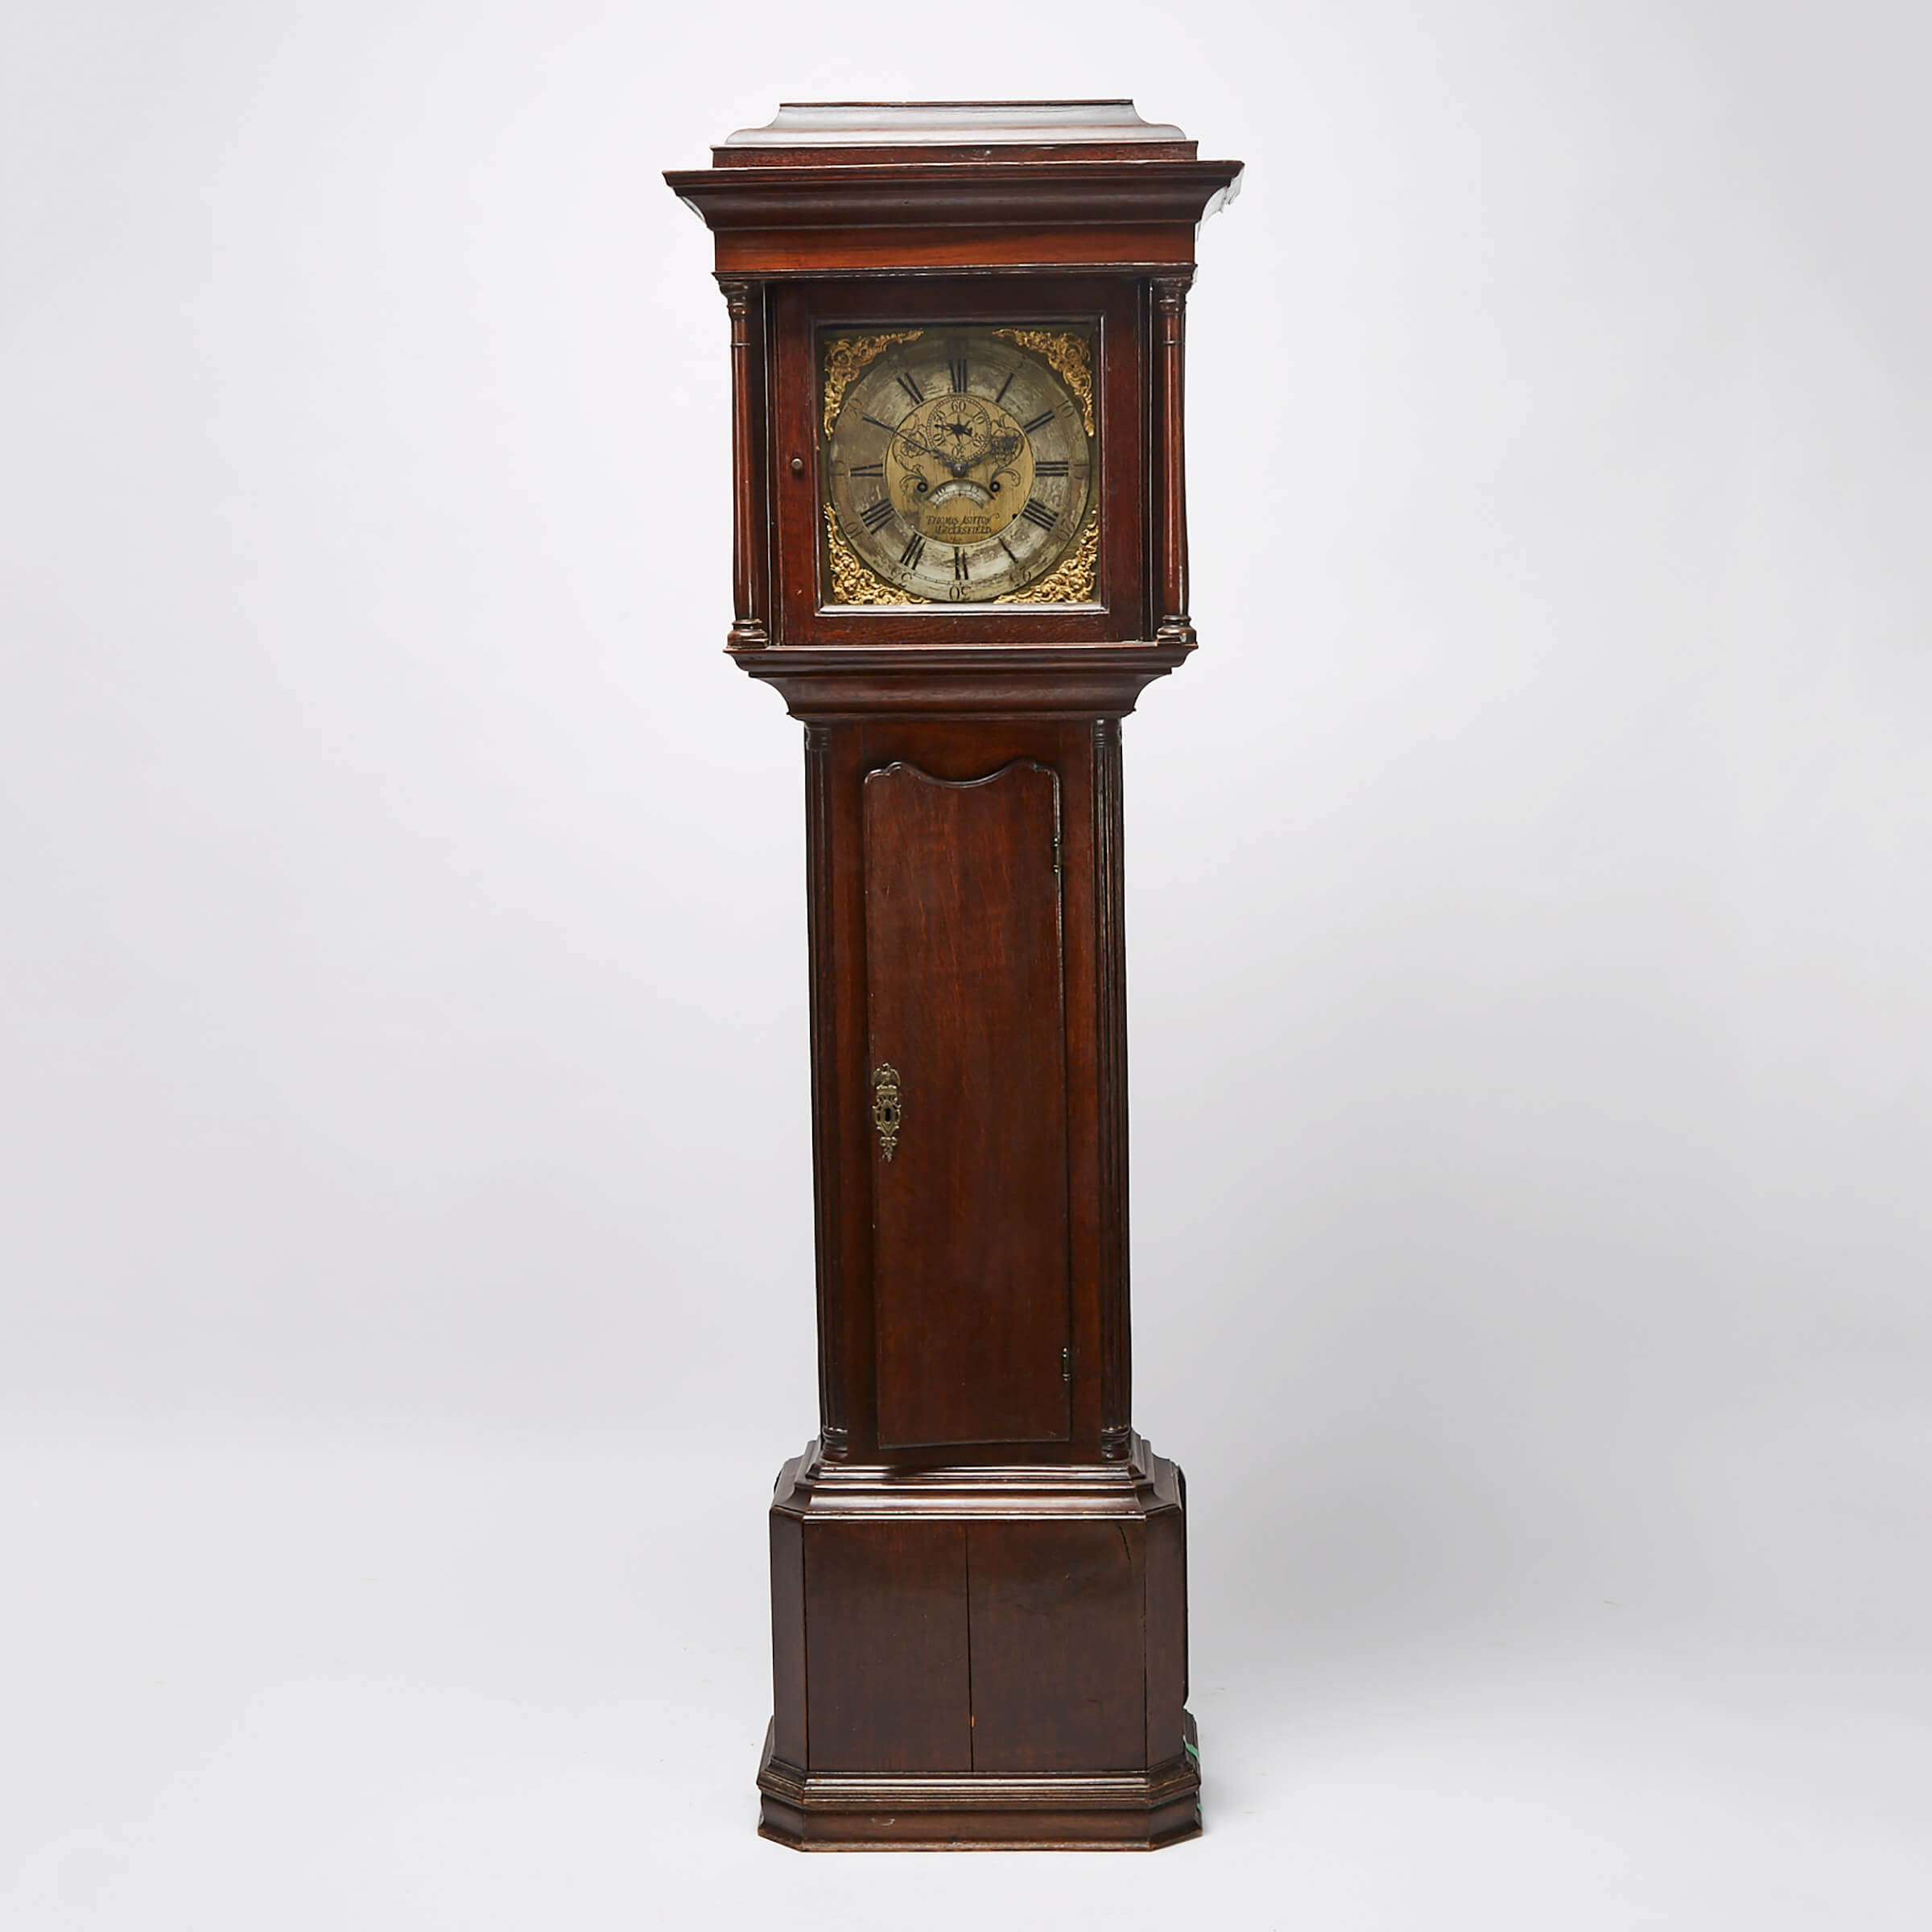 English Oak Tall Case Clock, Thomas Ashton, Macclesfield, 19th century